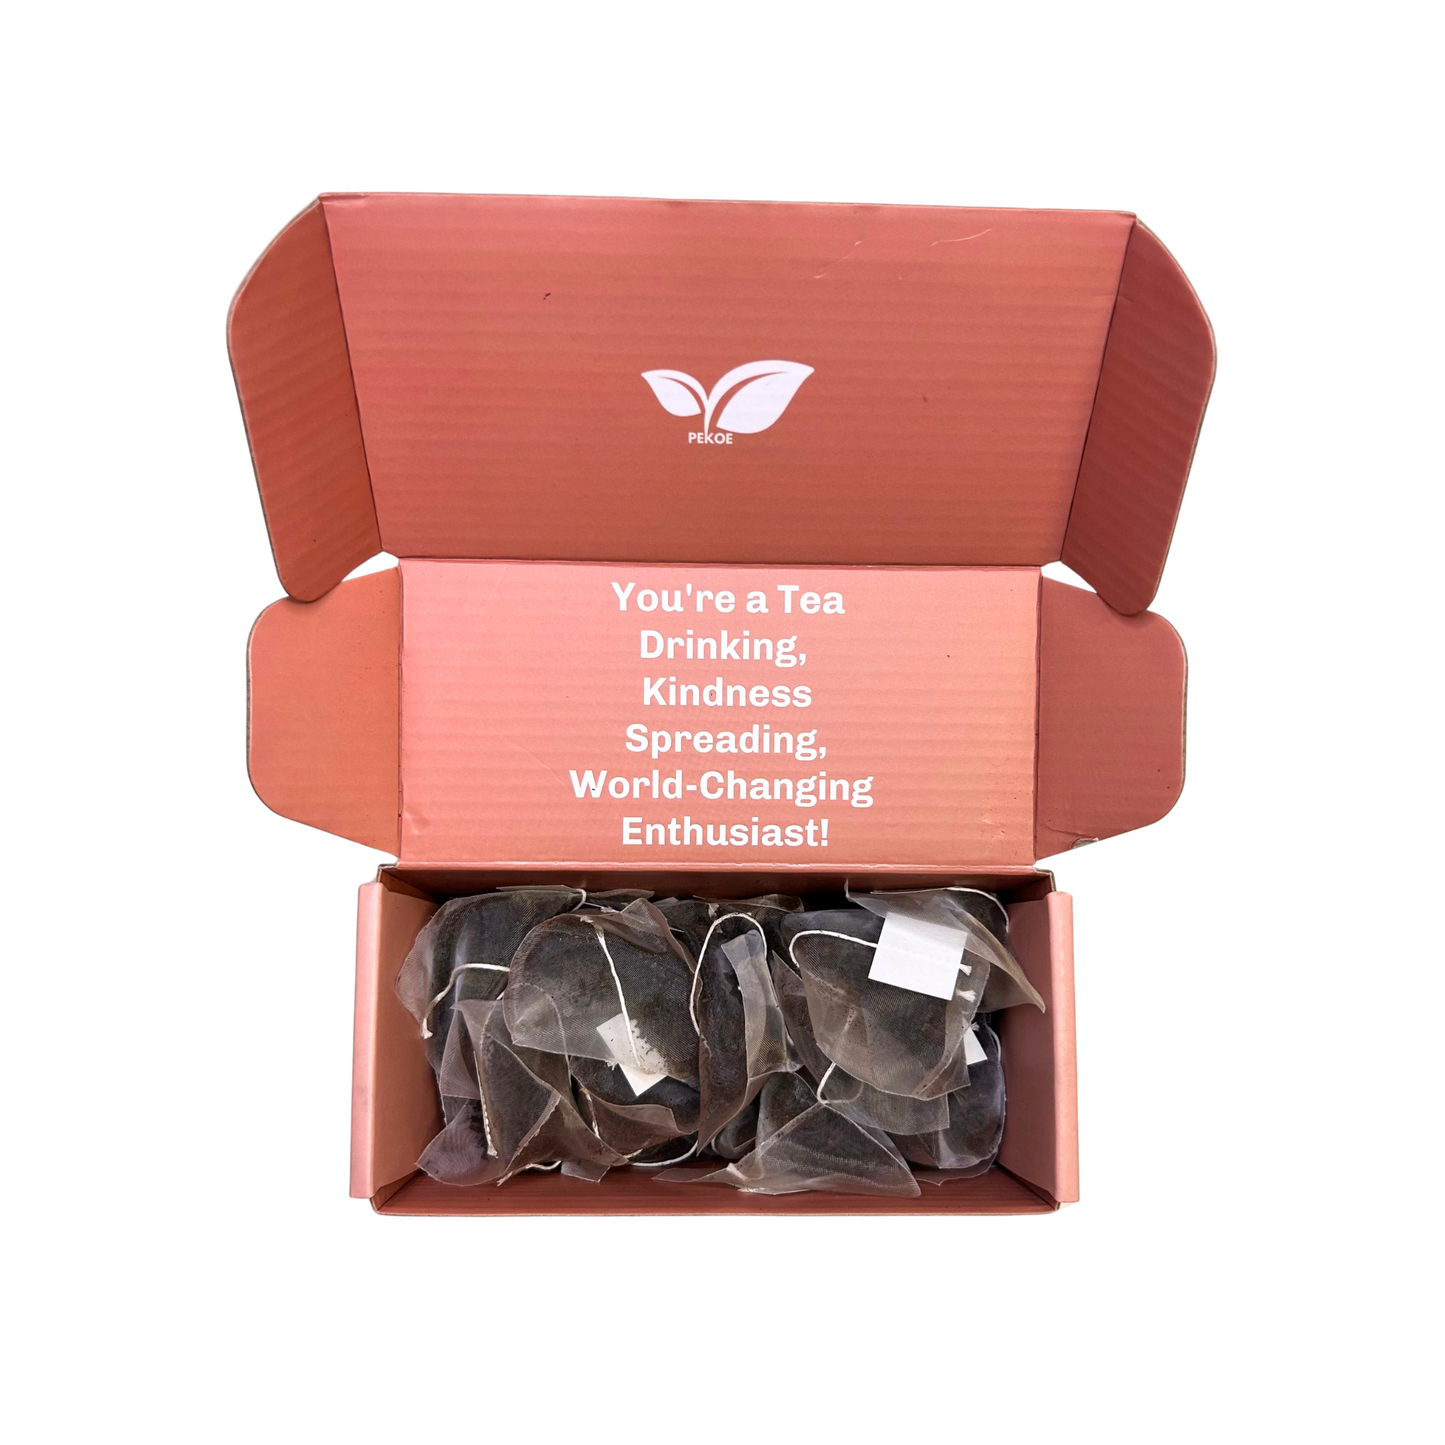 Premium Single Origin Orange Pekoe Black Tea (36 tea bags) - Ethically Sourced and Sustainably Harvested